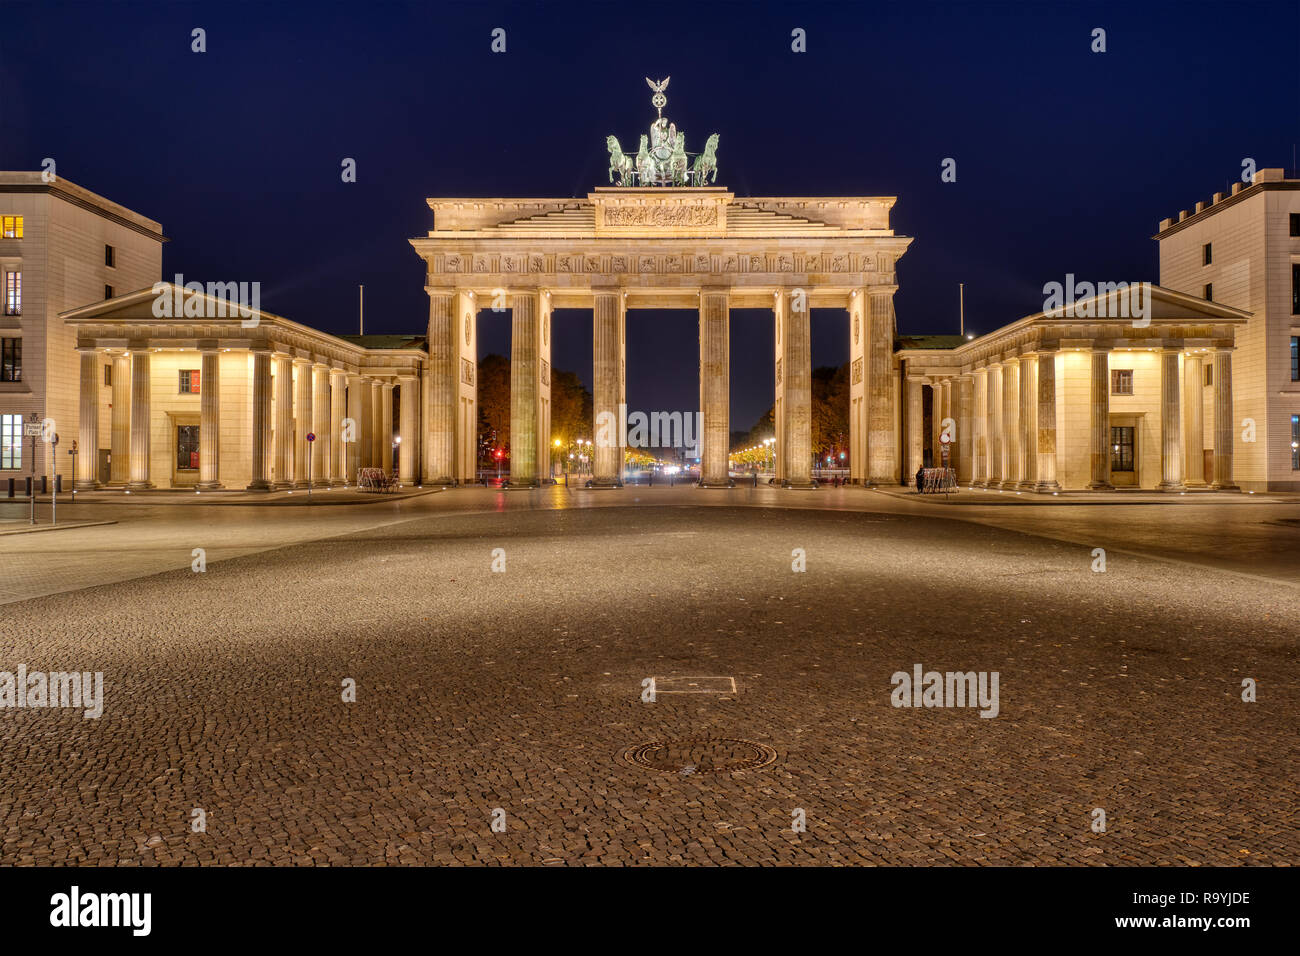 The famous illuminated Brandenburger Tor in Berlin at night Stock Photo